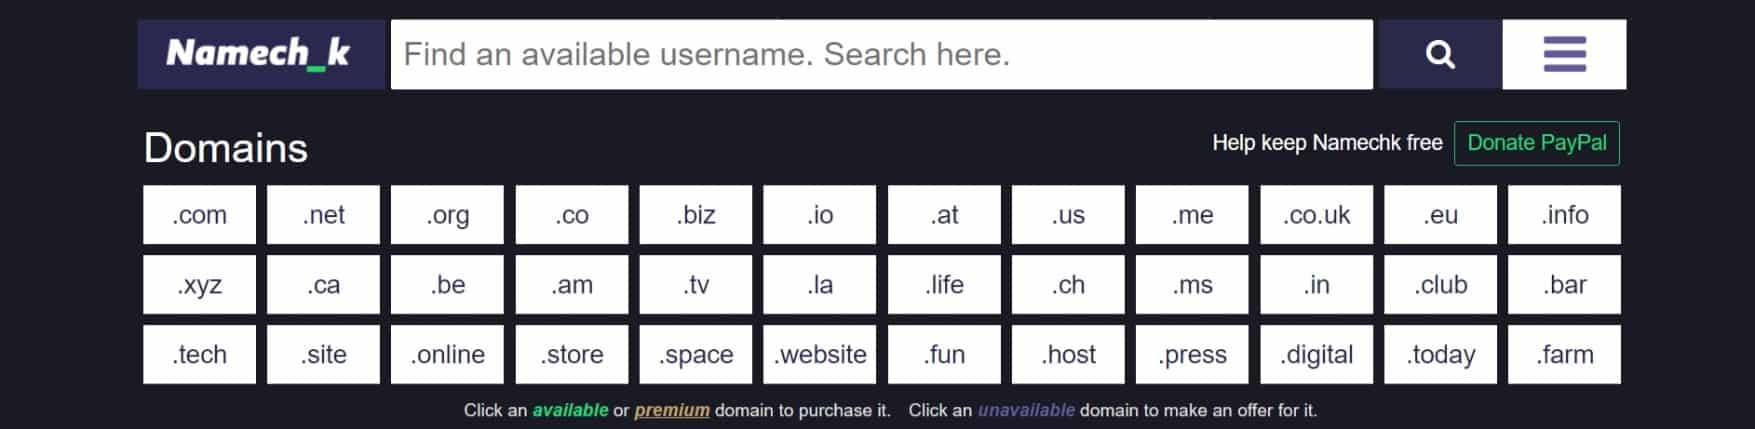 Namechk: Username, Domain, and Trademark Search | Username Registration